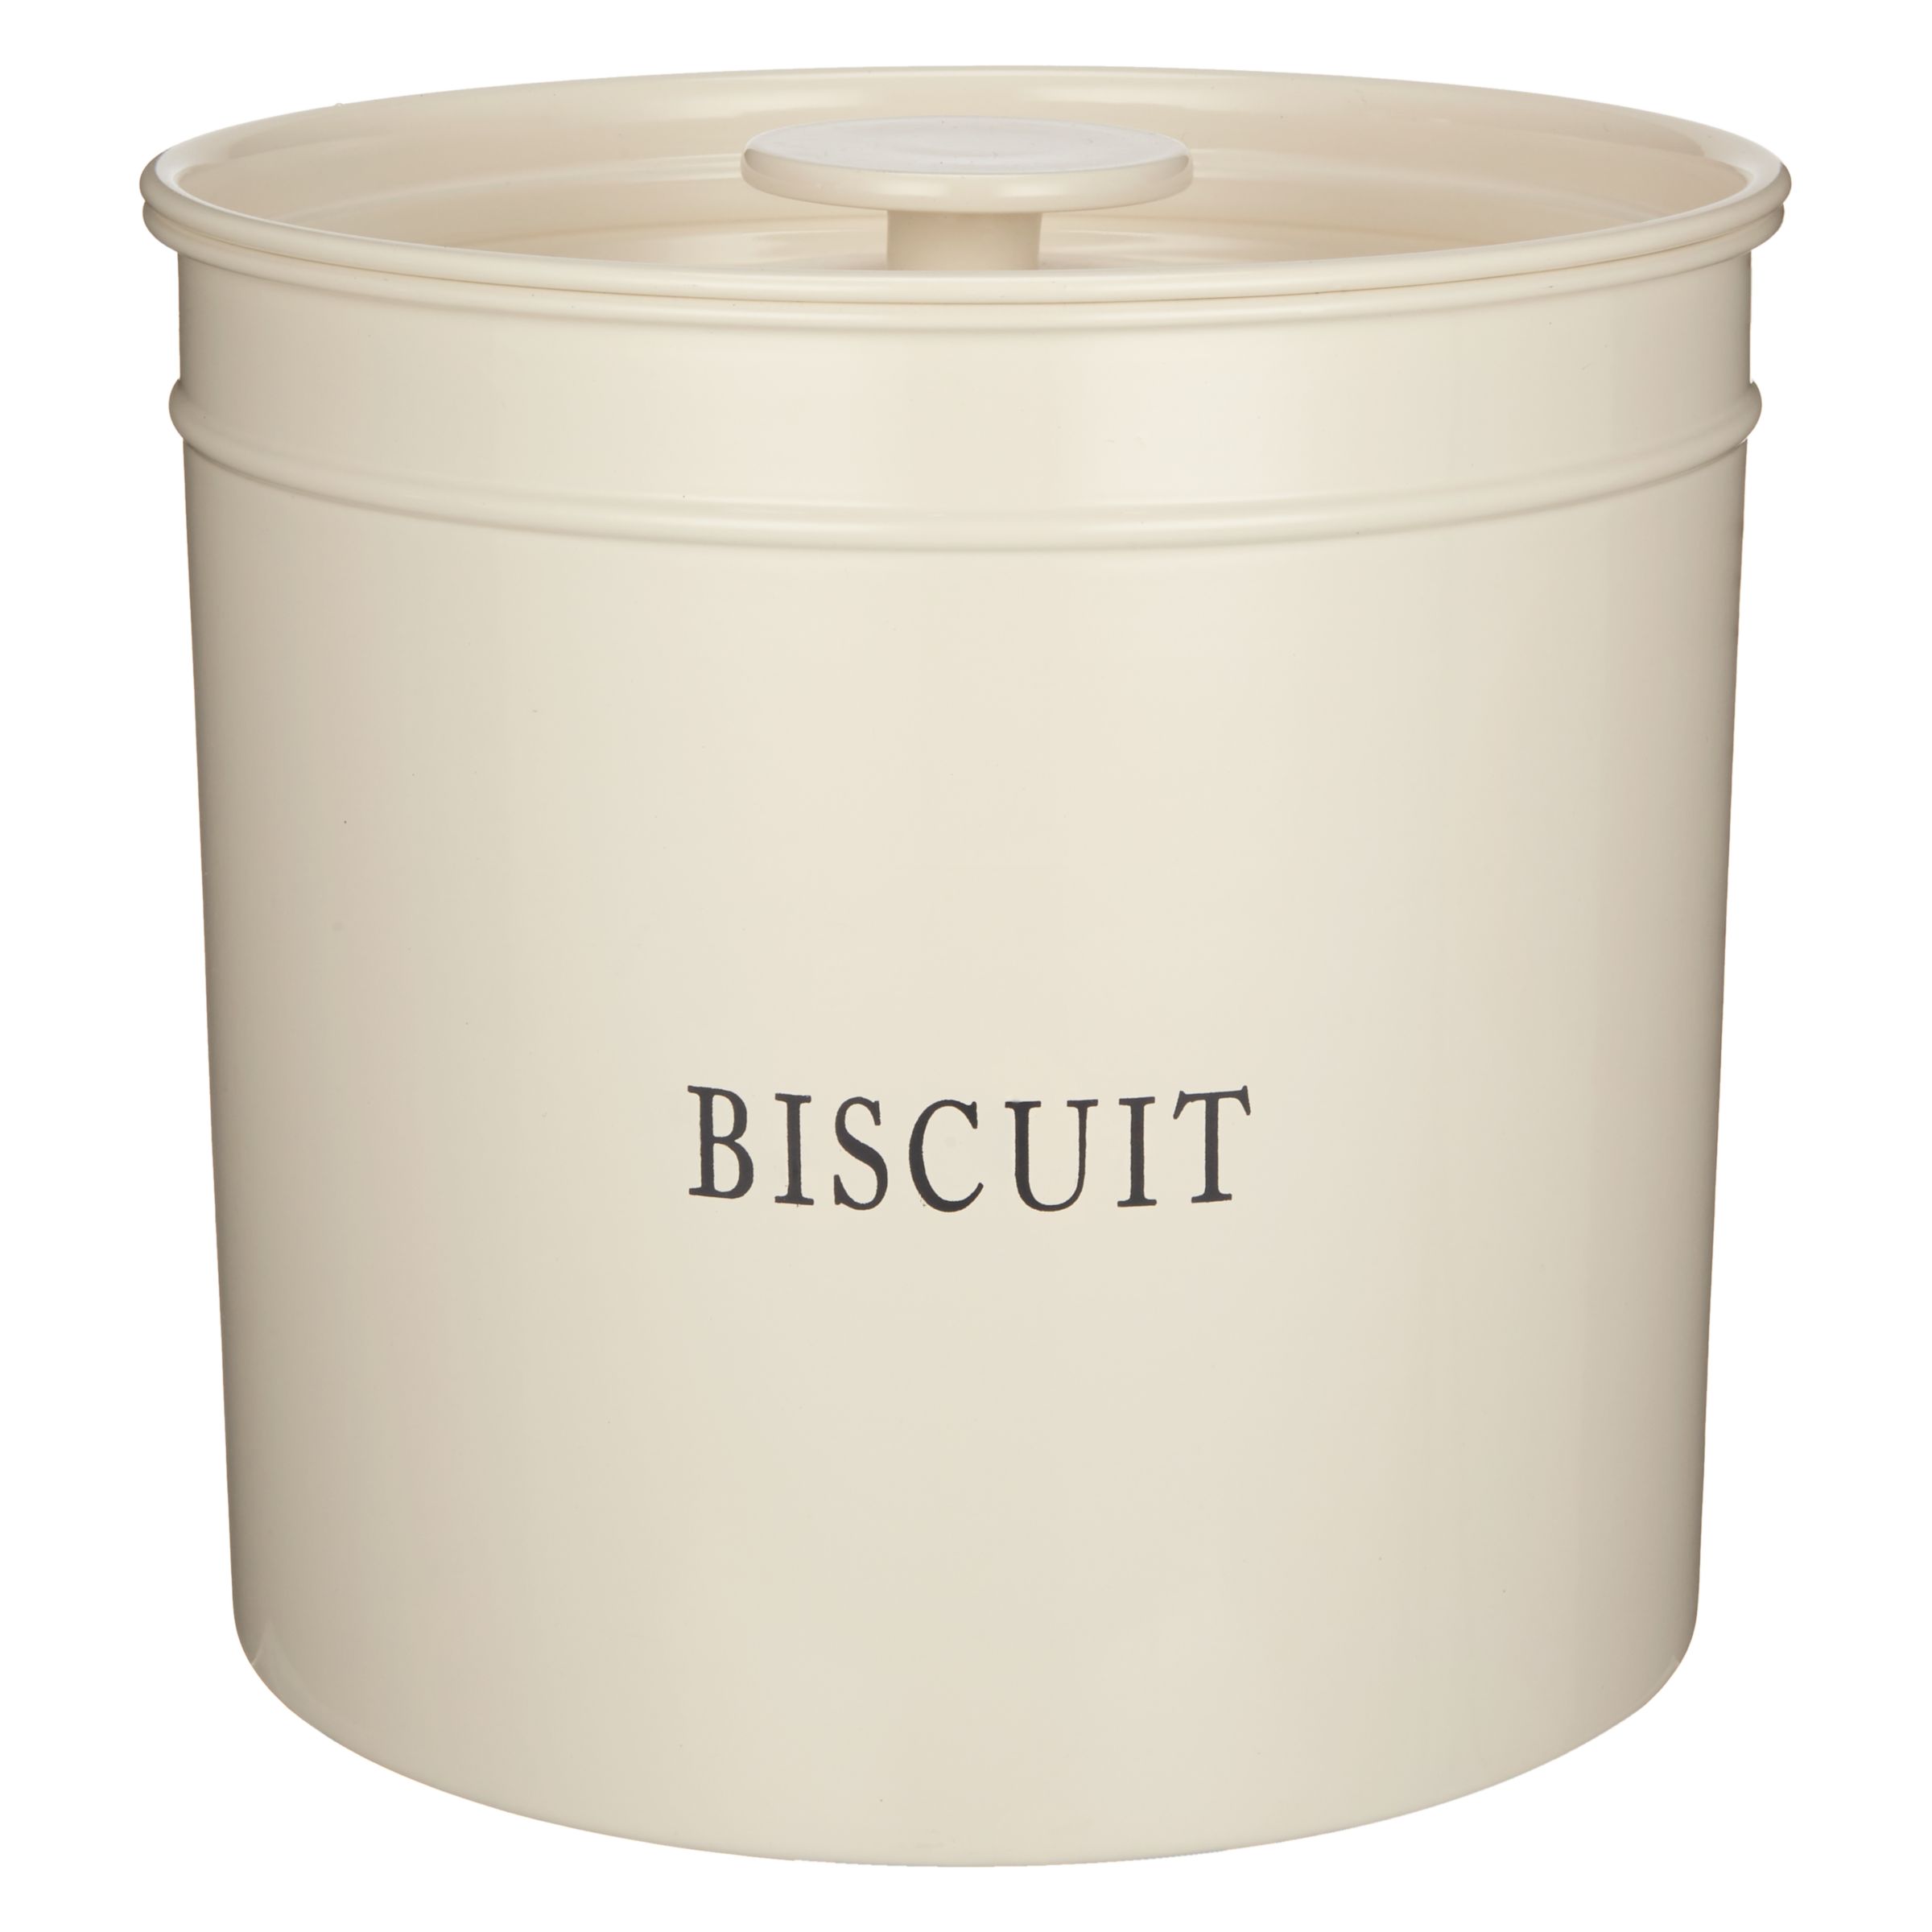 John Lewis & Partners Classic Enamel Biscuit Tin, Cream